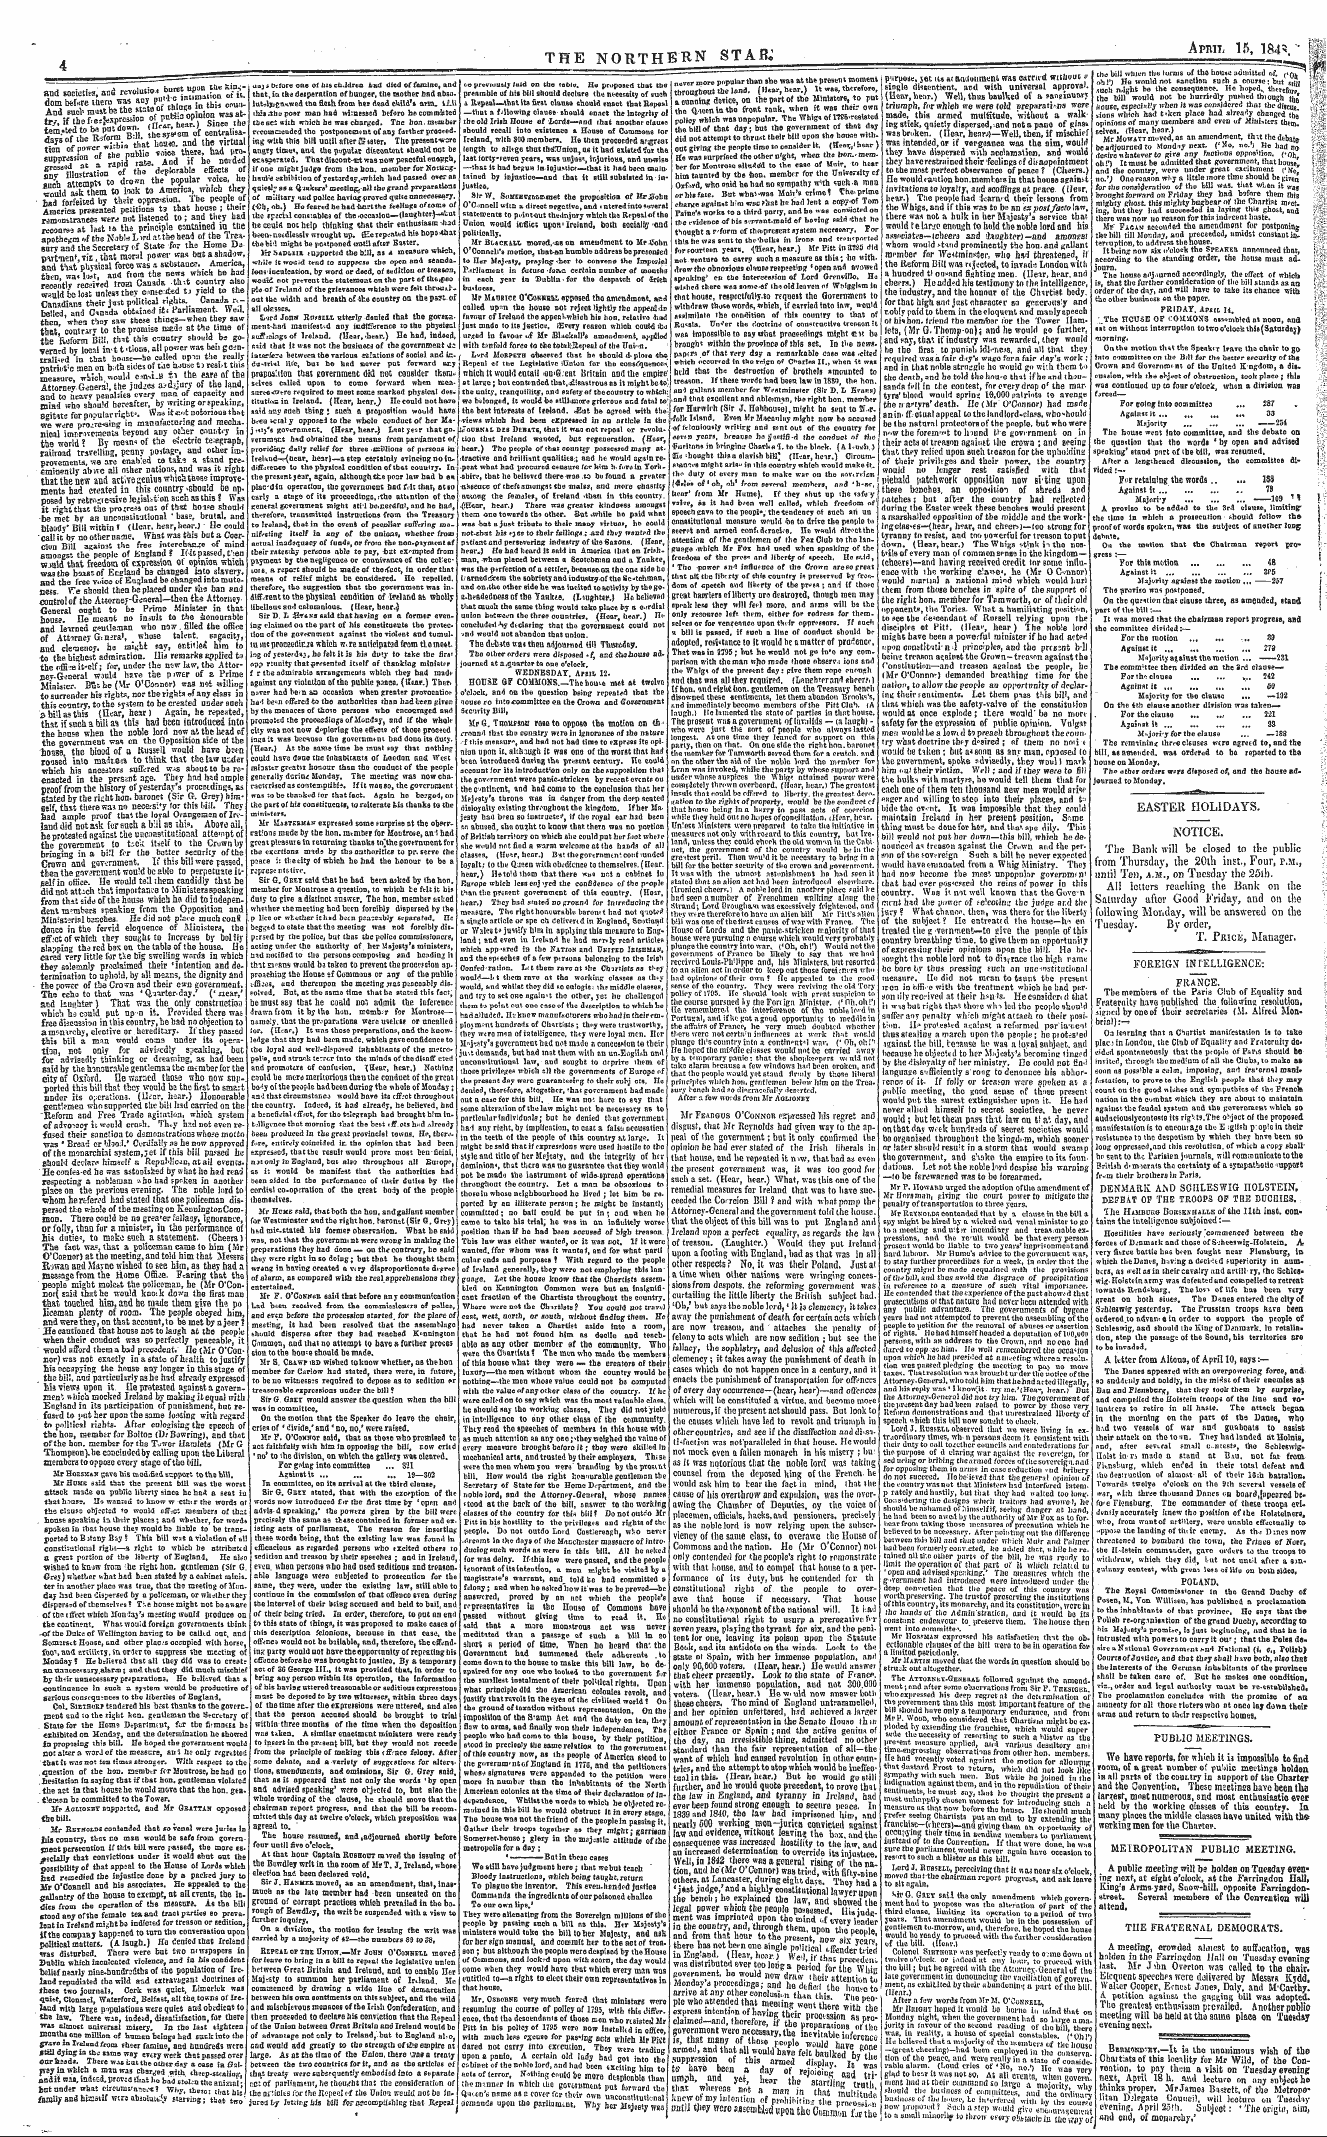 Northern Star (1837-1852): jS F Y, 3rd edition - Metropolitan Public Meeting. A Public Me...